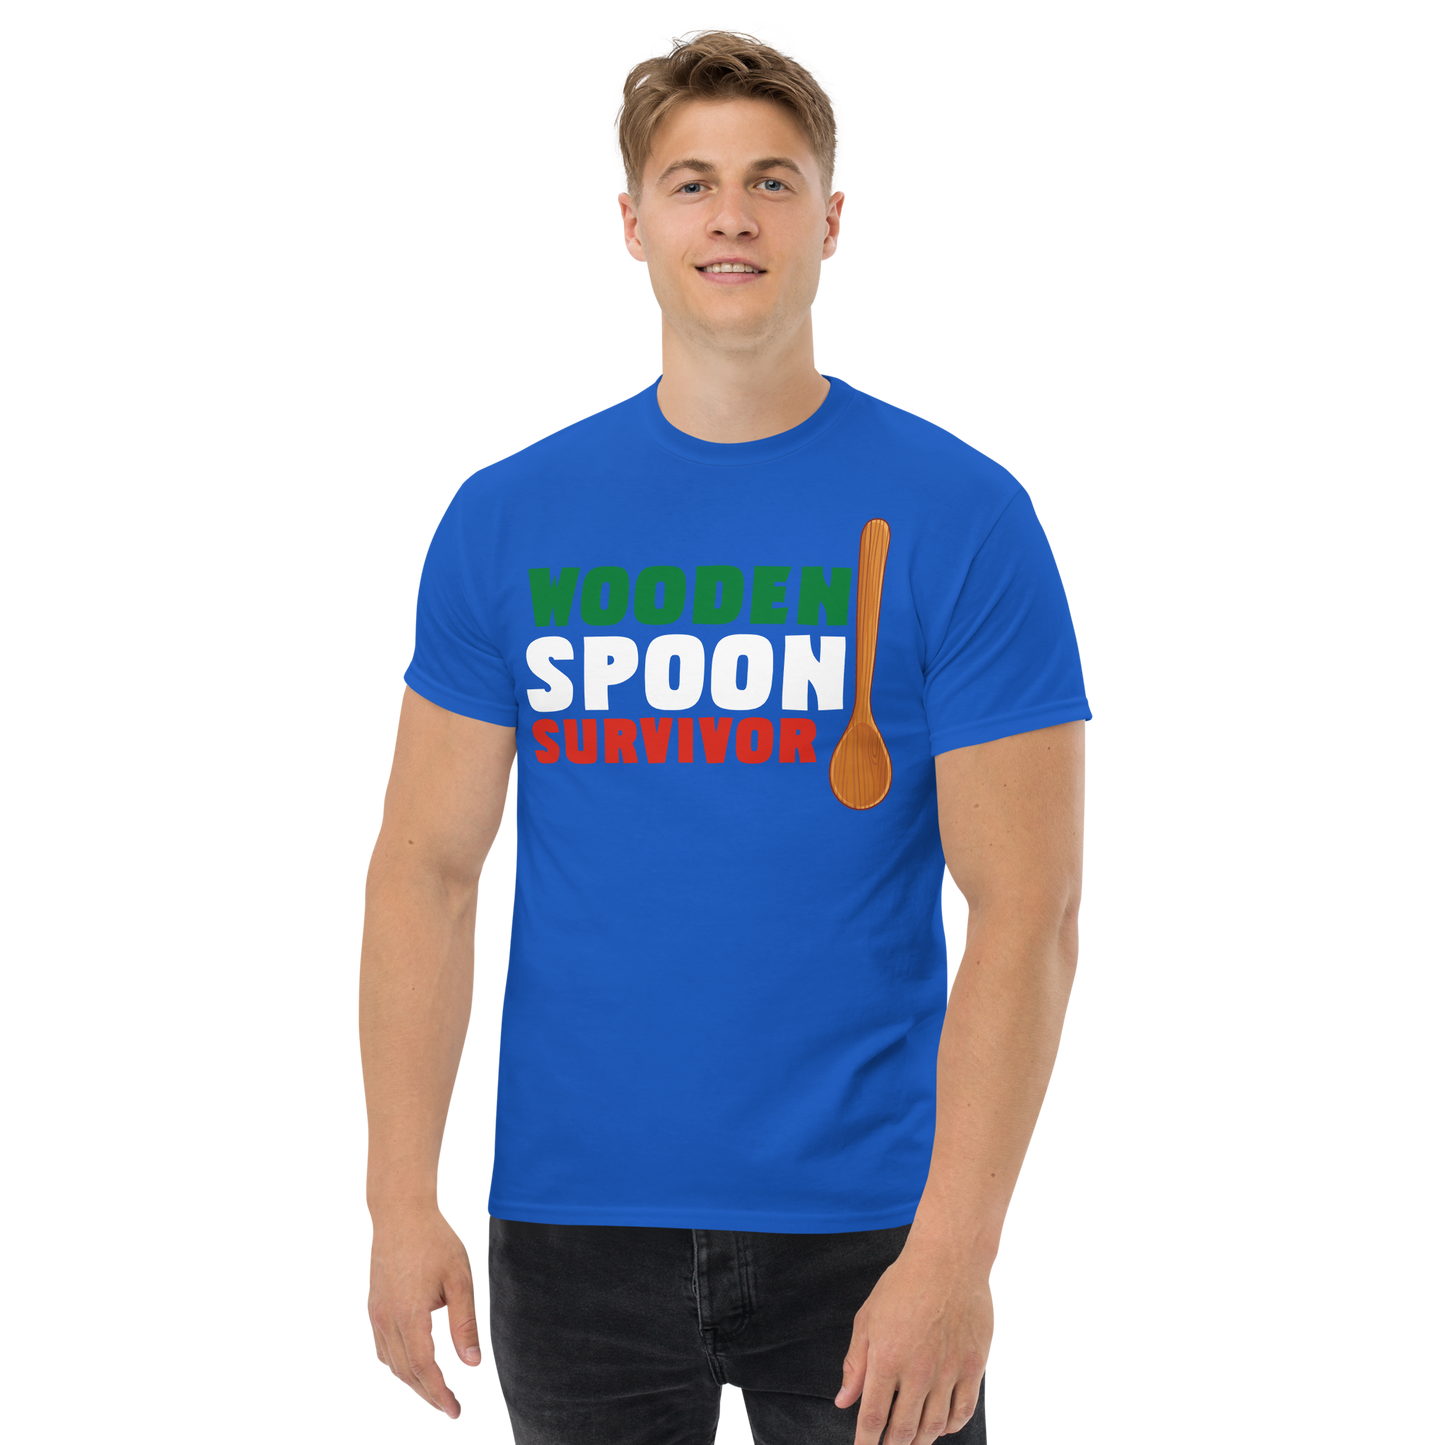 Wooden Spoon Survivor Humor Italian T-Shirt: Embrace the Culinary Adventures- Vintage Tee for Italians